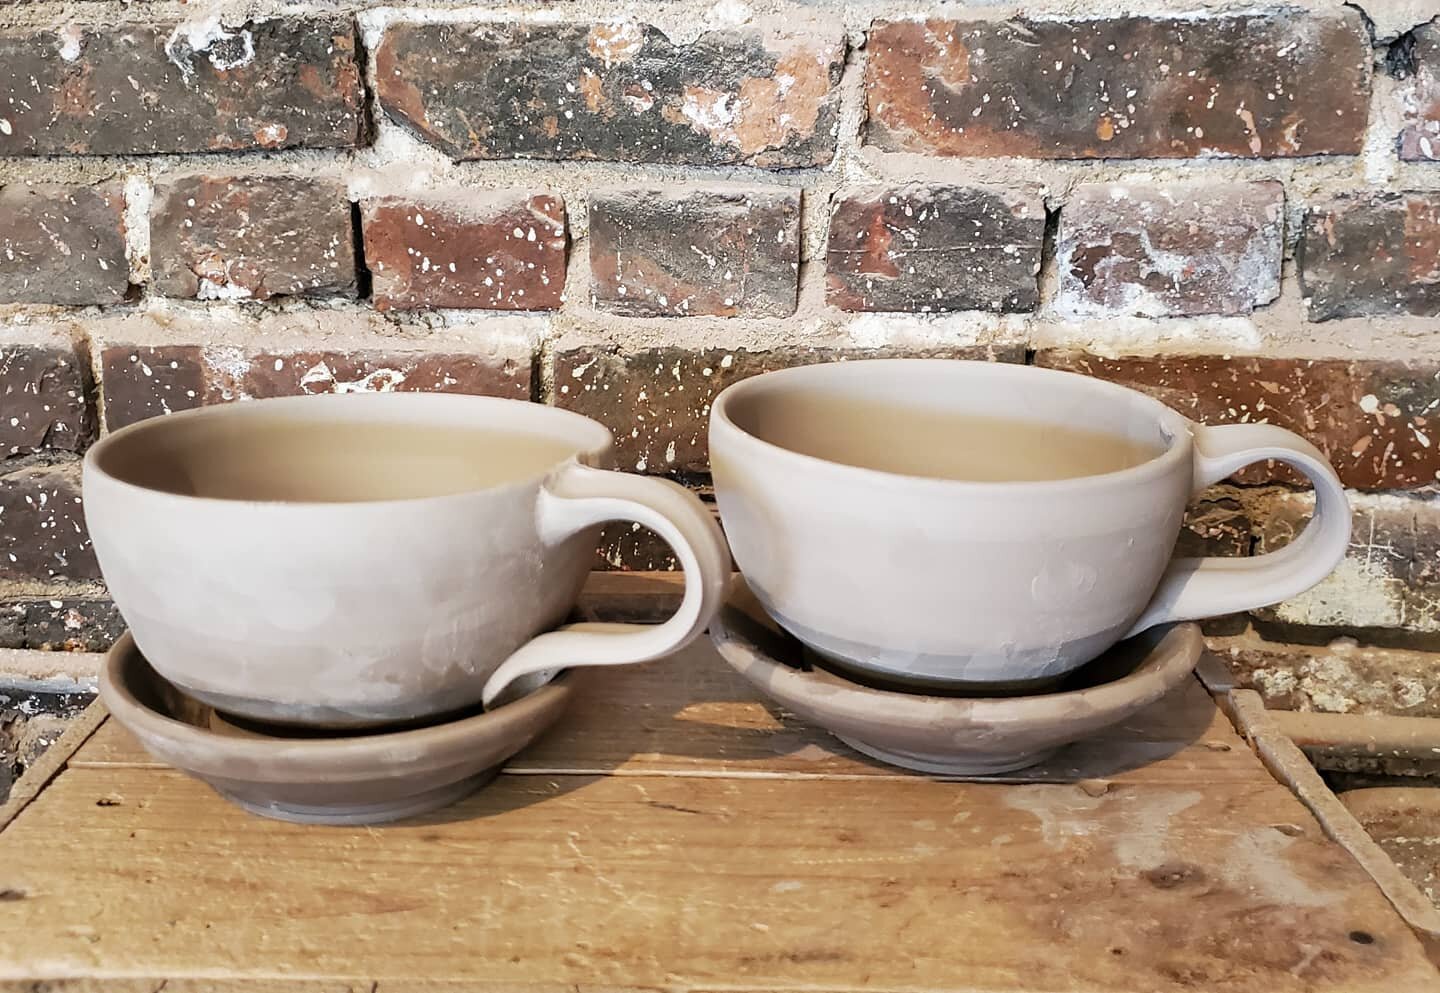 Latte/soup mugs

#potterywheel 
#haroldkaplanpottery
#latte
#soup